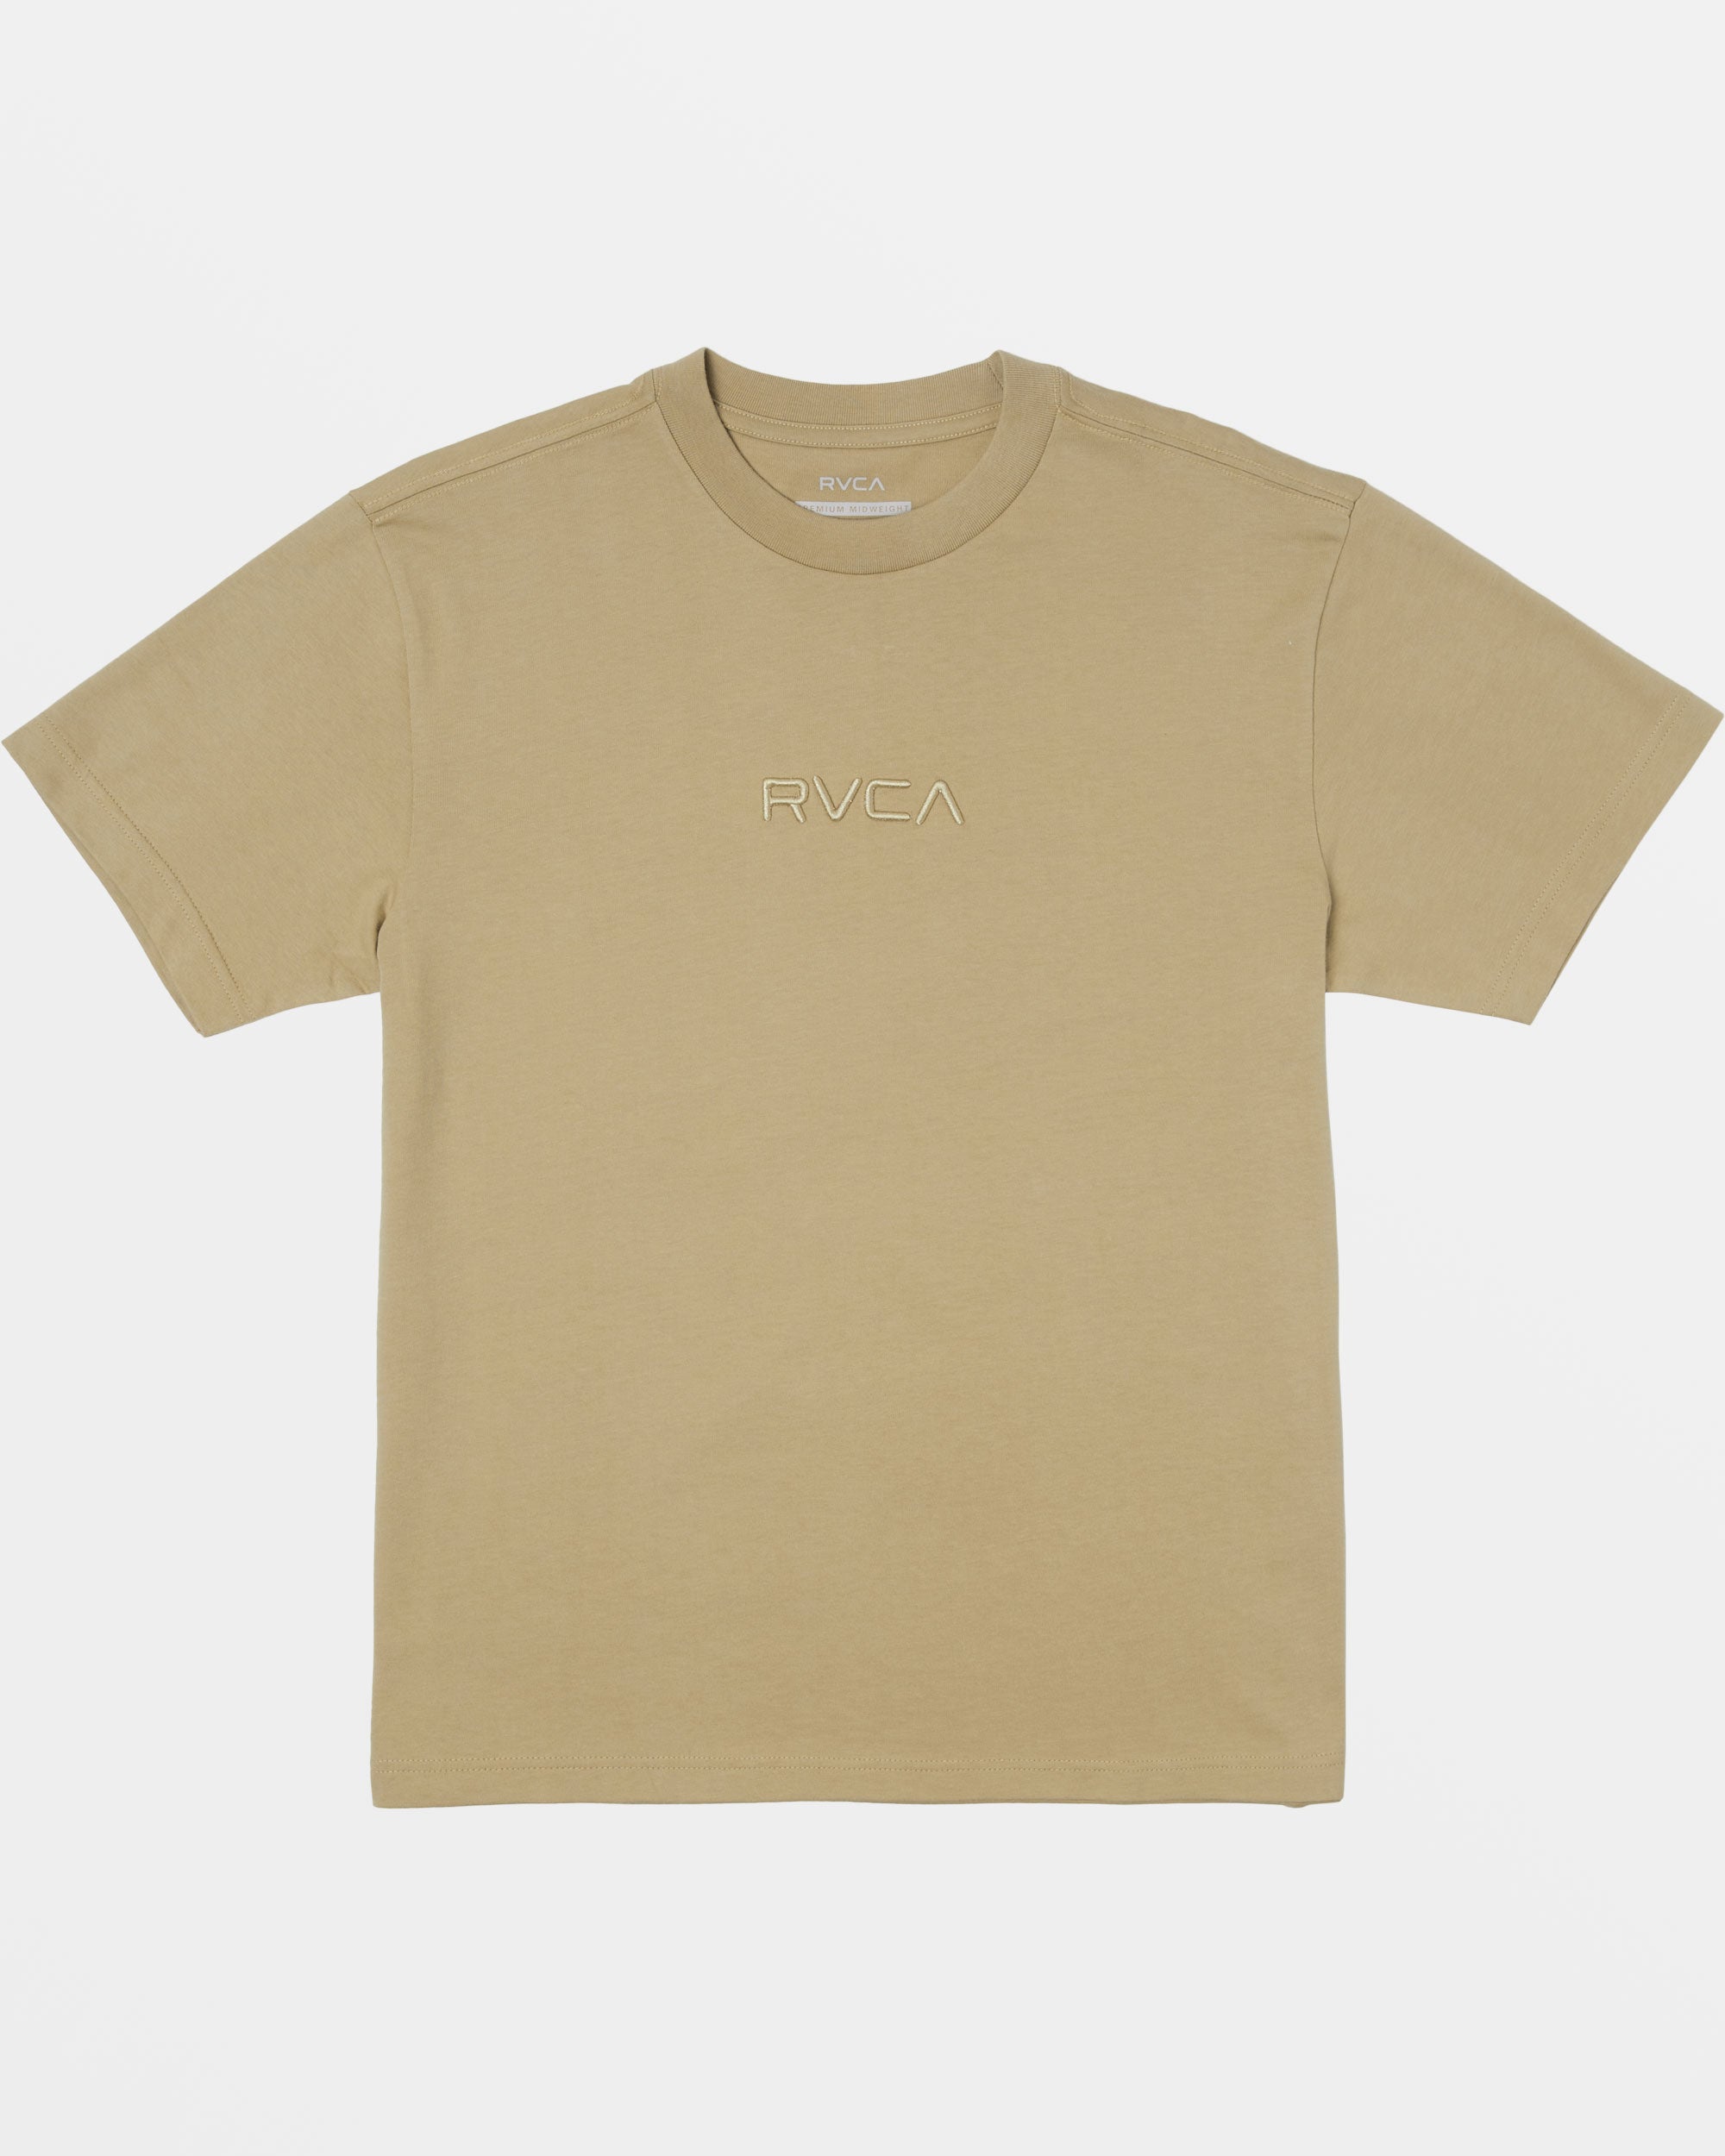 Small RVCA Embroidery T-Shirt - Khaki